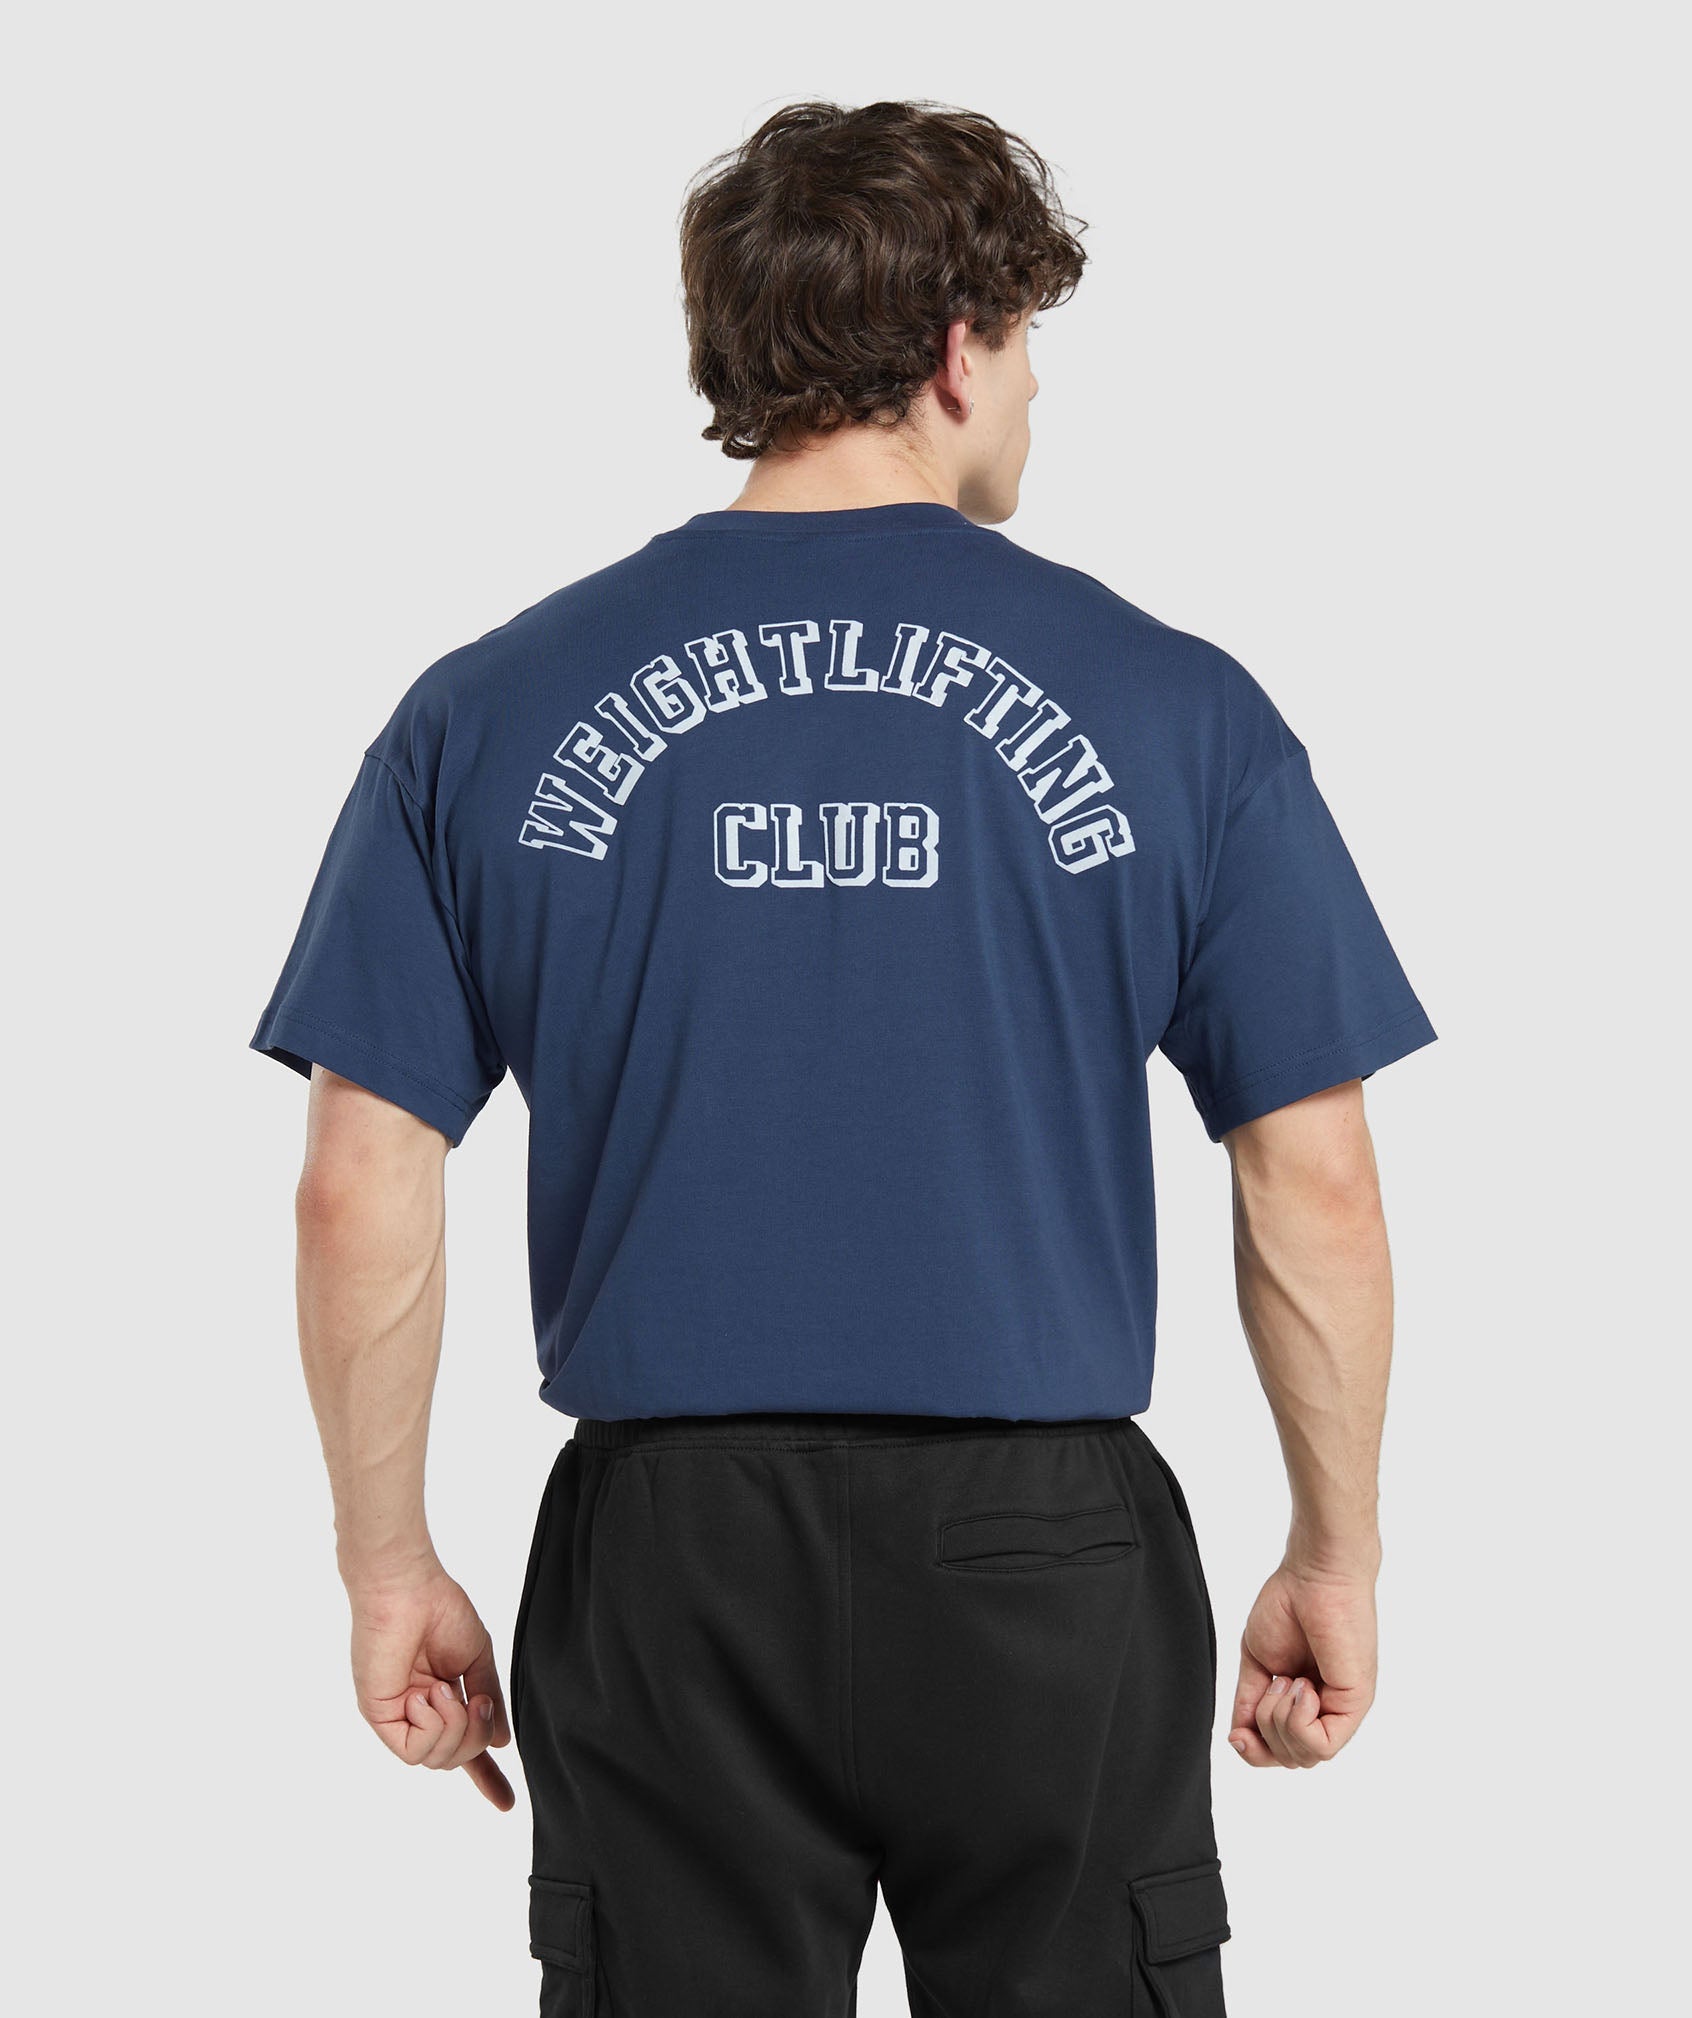 Weightlifting Club T-Shirt in Ash Blue